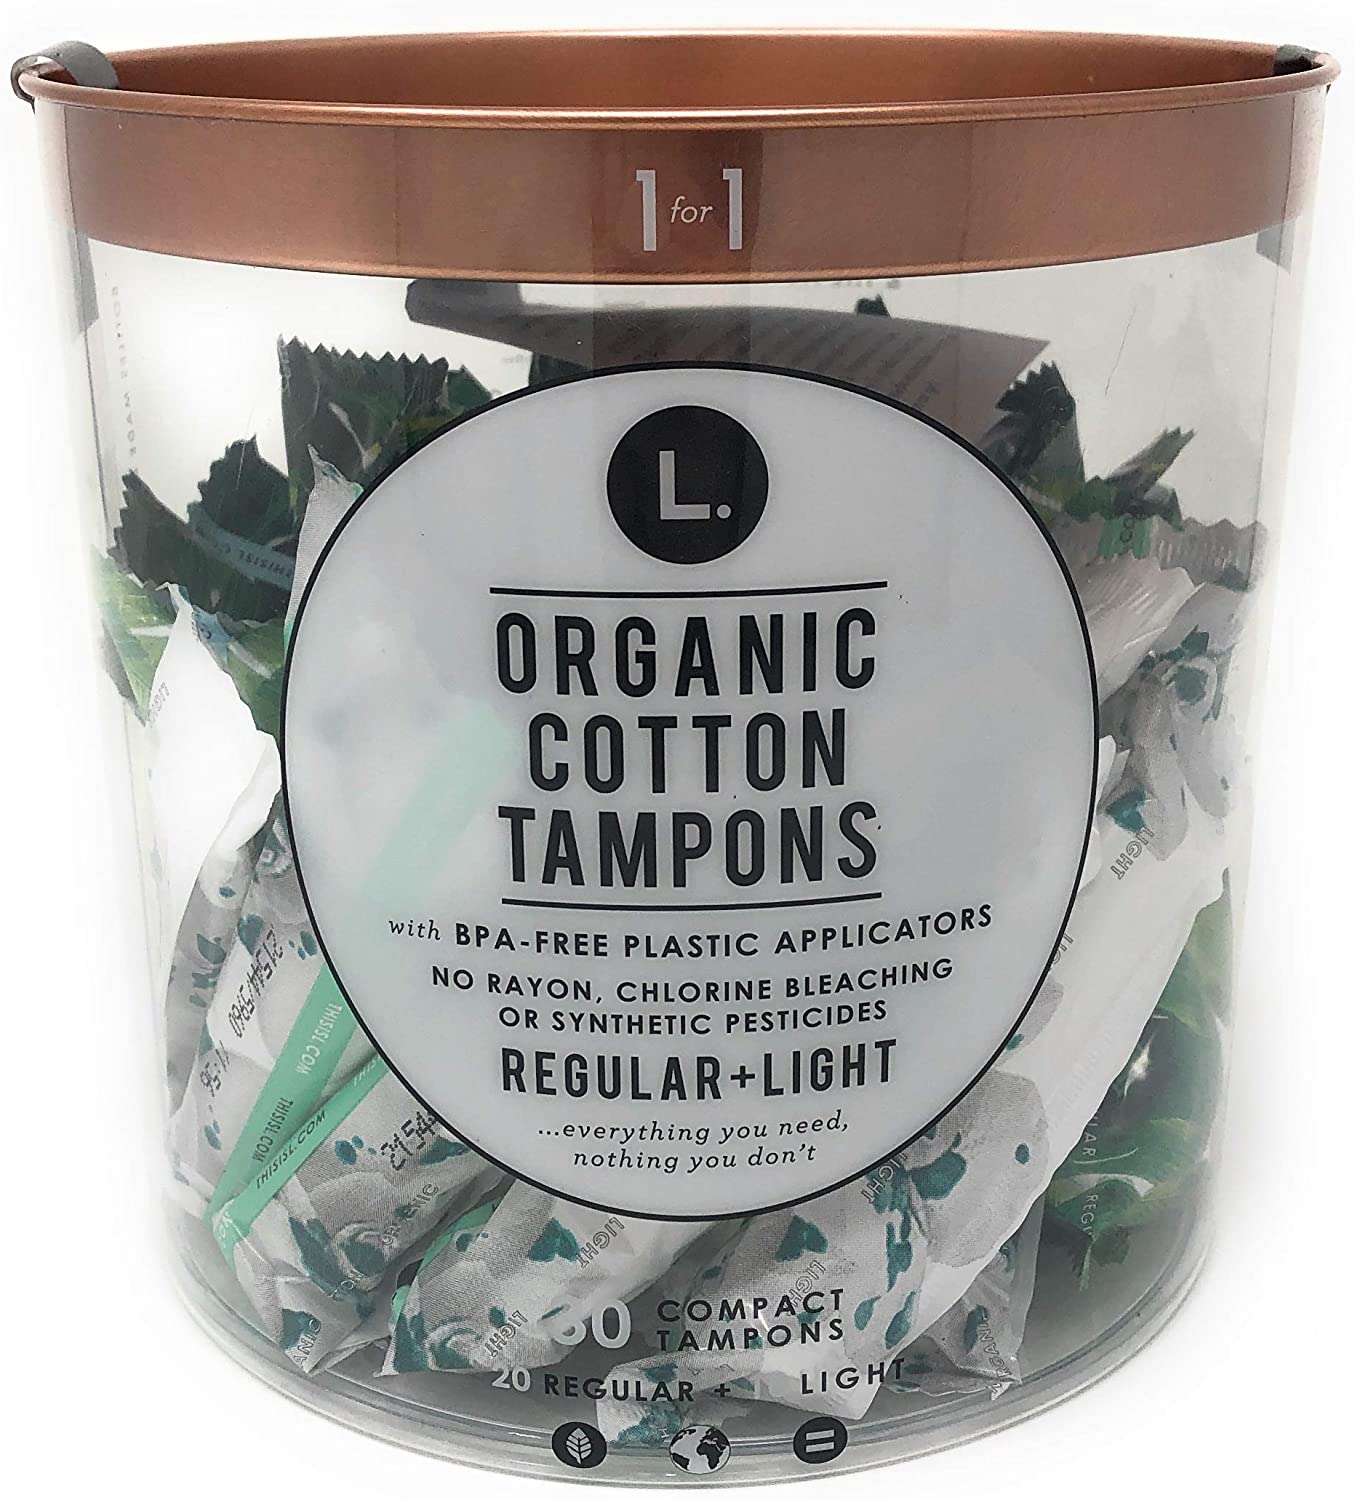 L. Organic Cotton Tampons, 20 Regular 10 Light (30 Compact Tampons Total) with BPA-Free Plastic Applicators